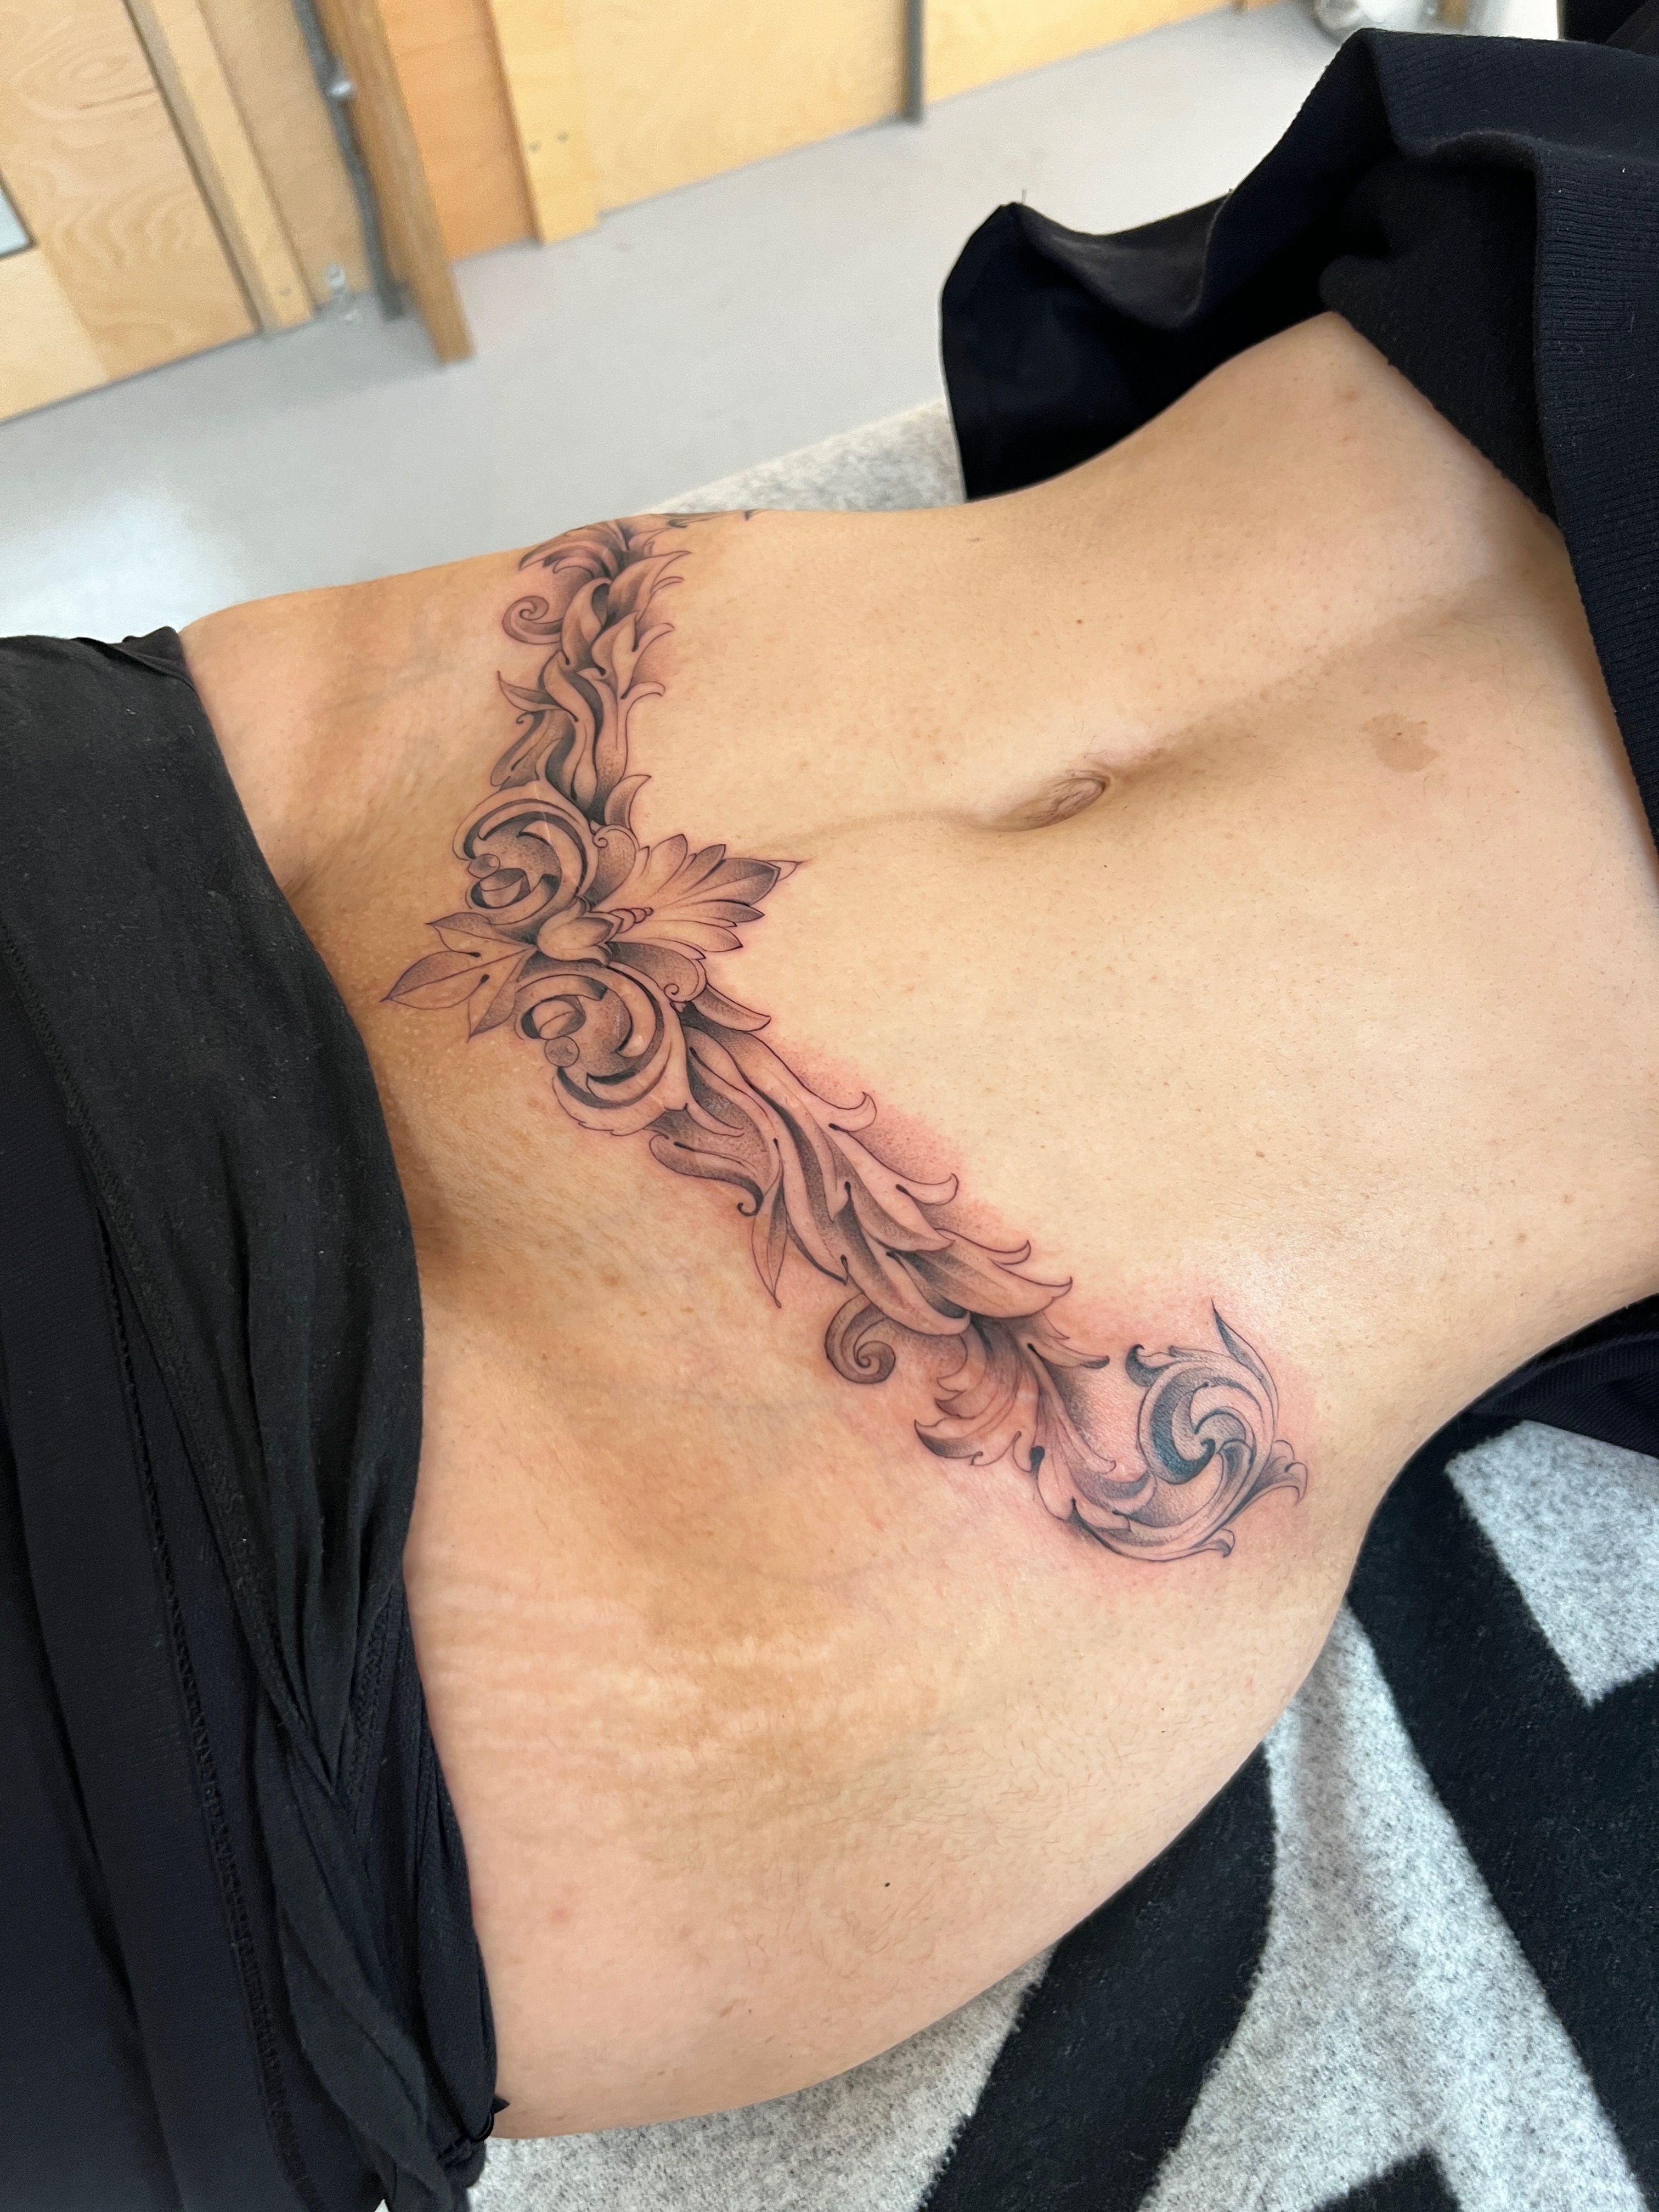 C-section tattoos: mums reveal caesarean scar body art | MadeForMums